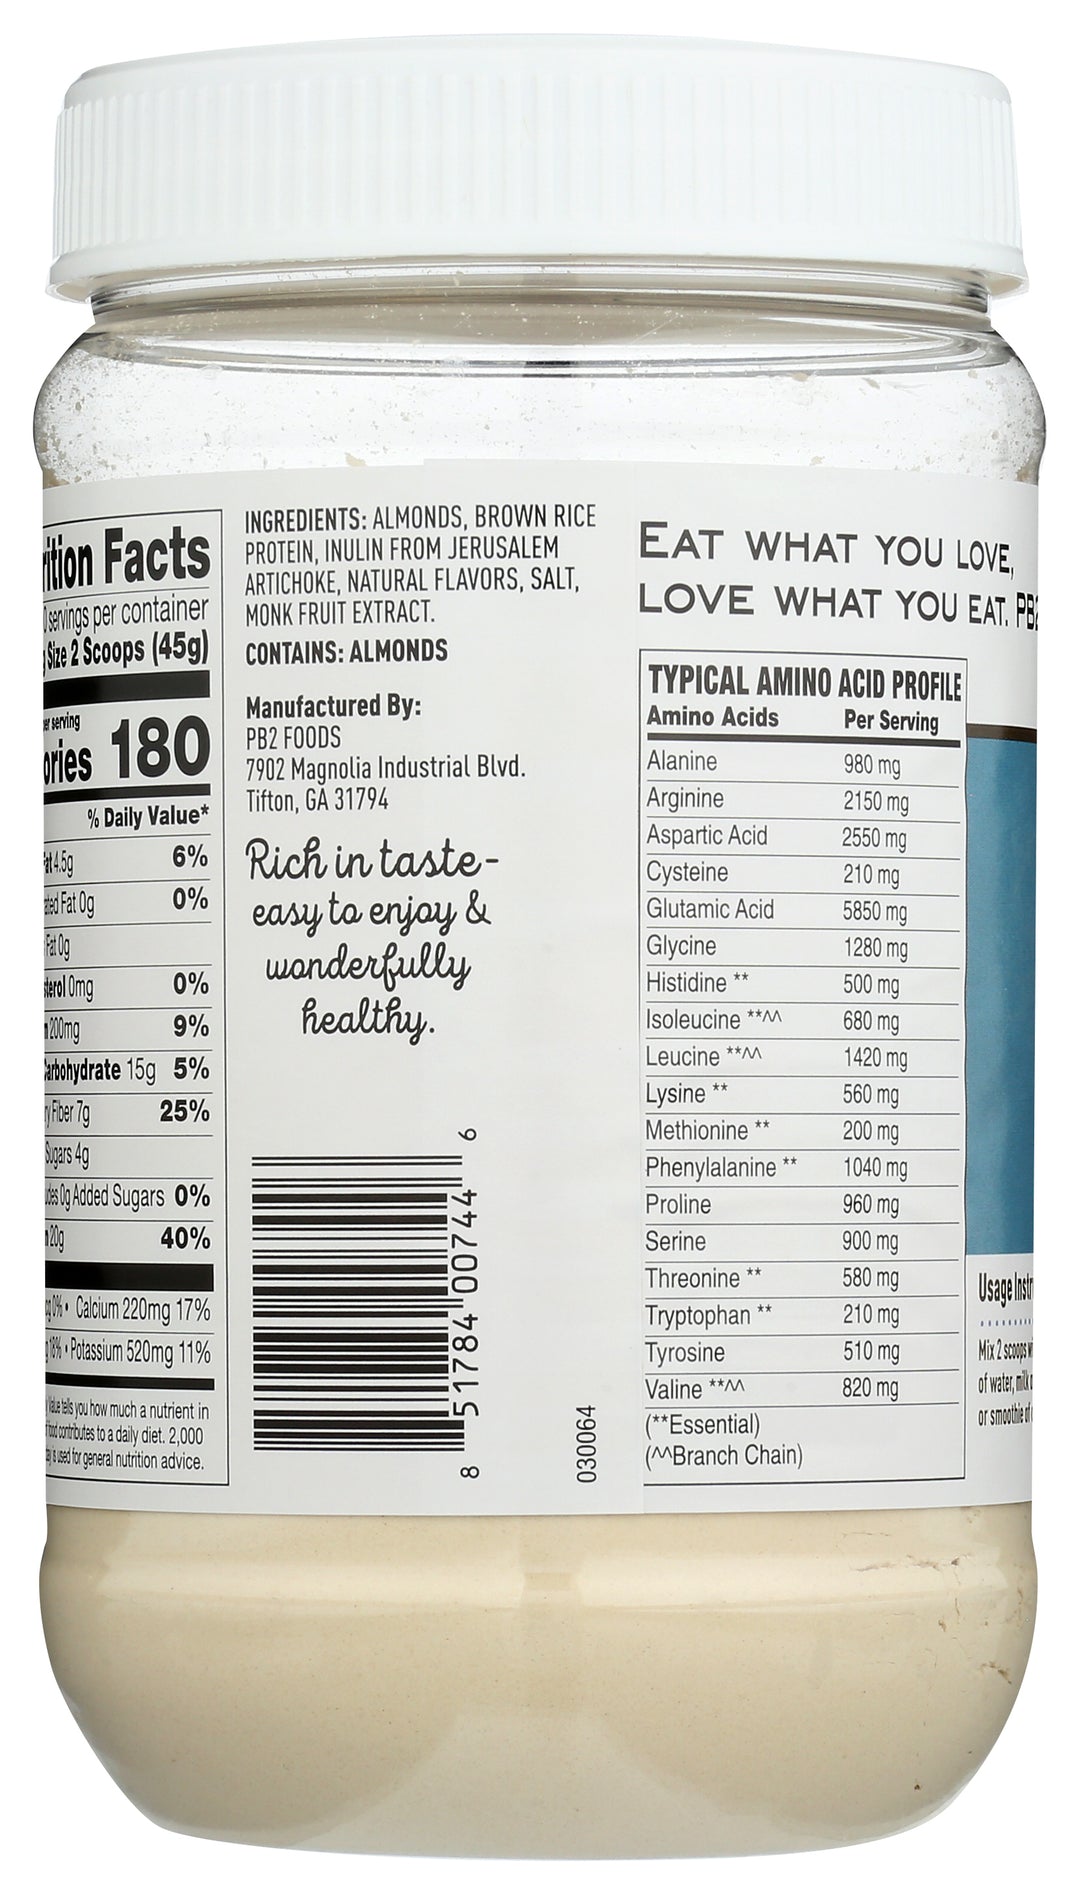 Pb2 Foods Performance Almond With Madagascar Vanilla-16 oz.-6/Case